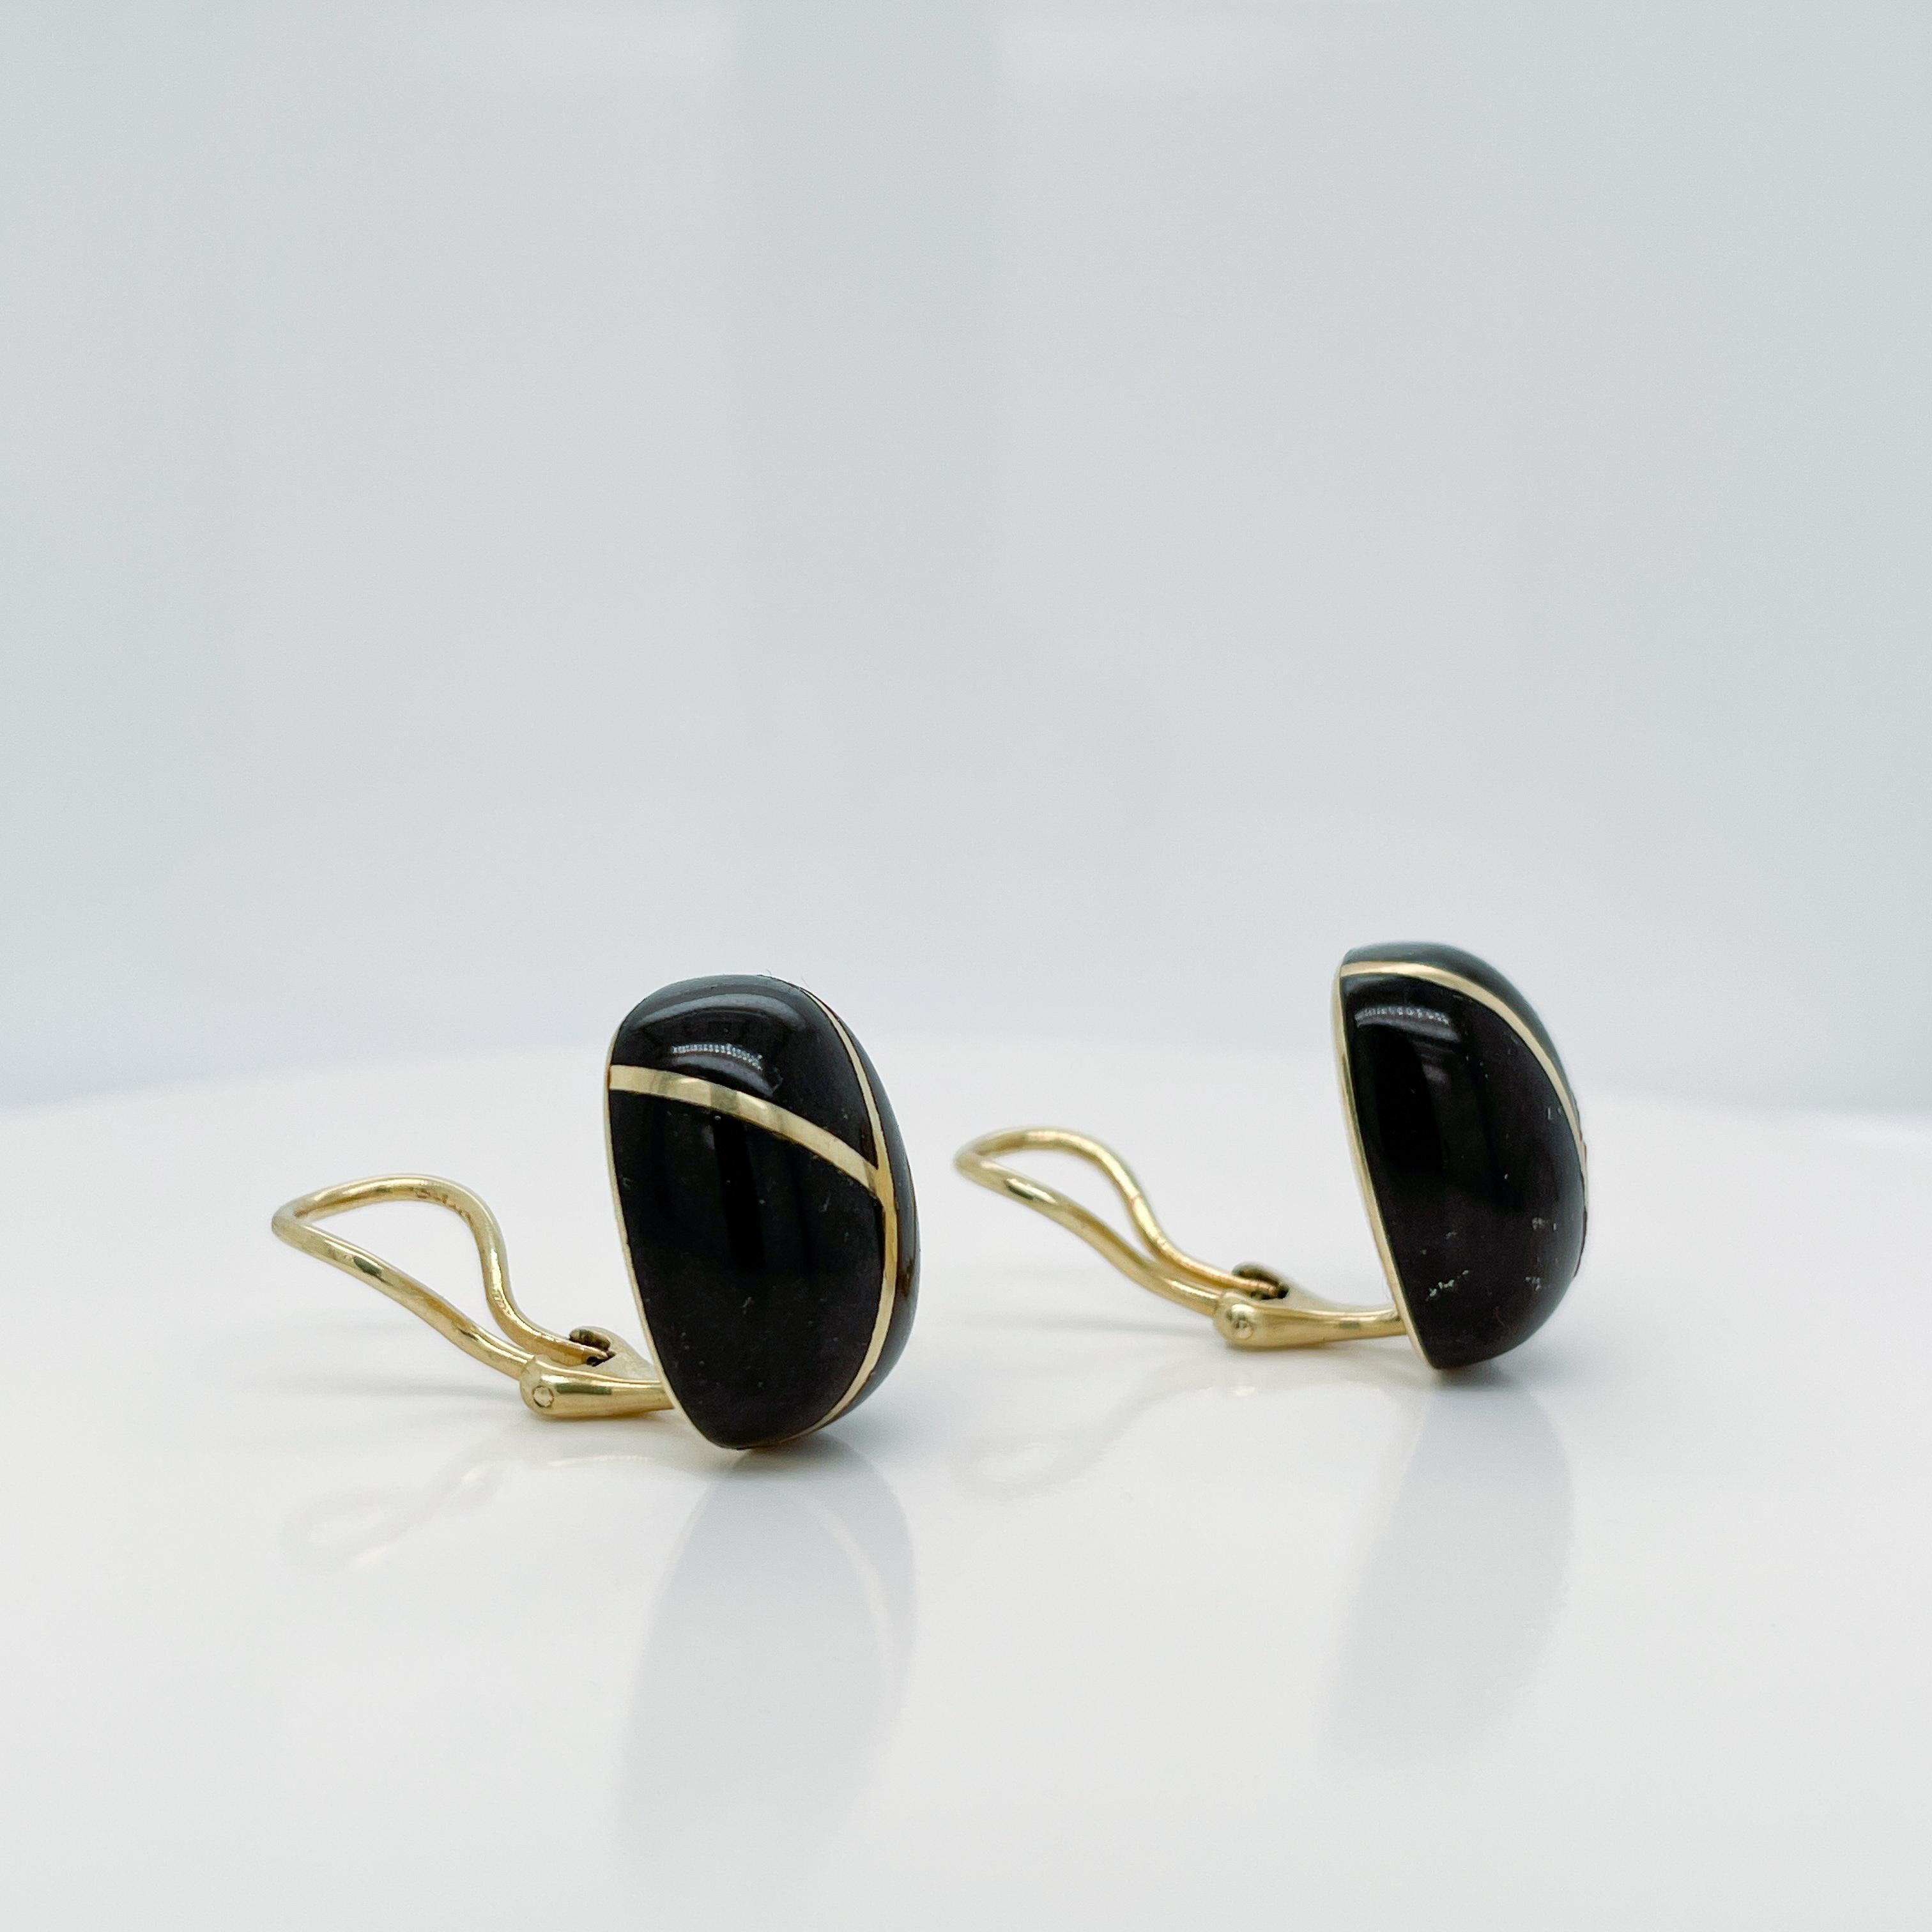 Pair Tiffany & Co 18K Gold & Black Onyx Earrings by Angela Cummings For Sale 5